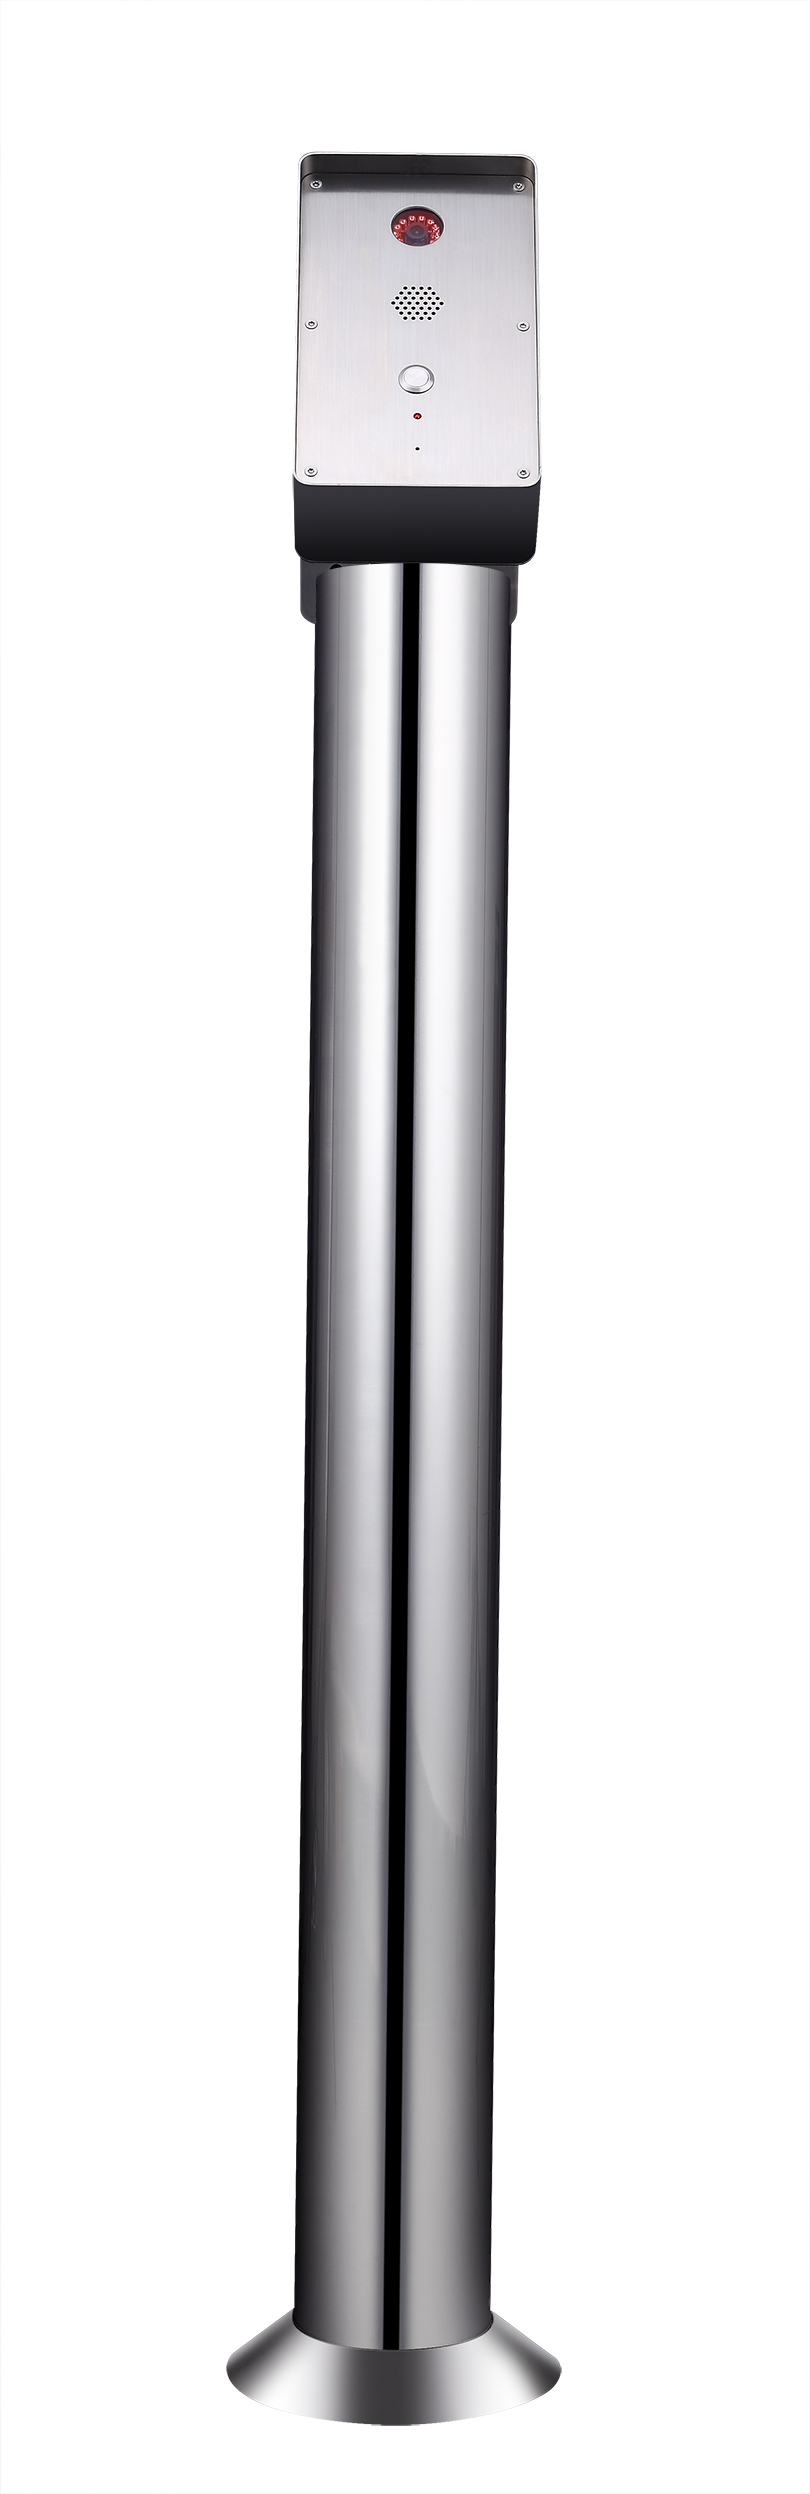 Stainless steel telephone column